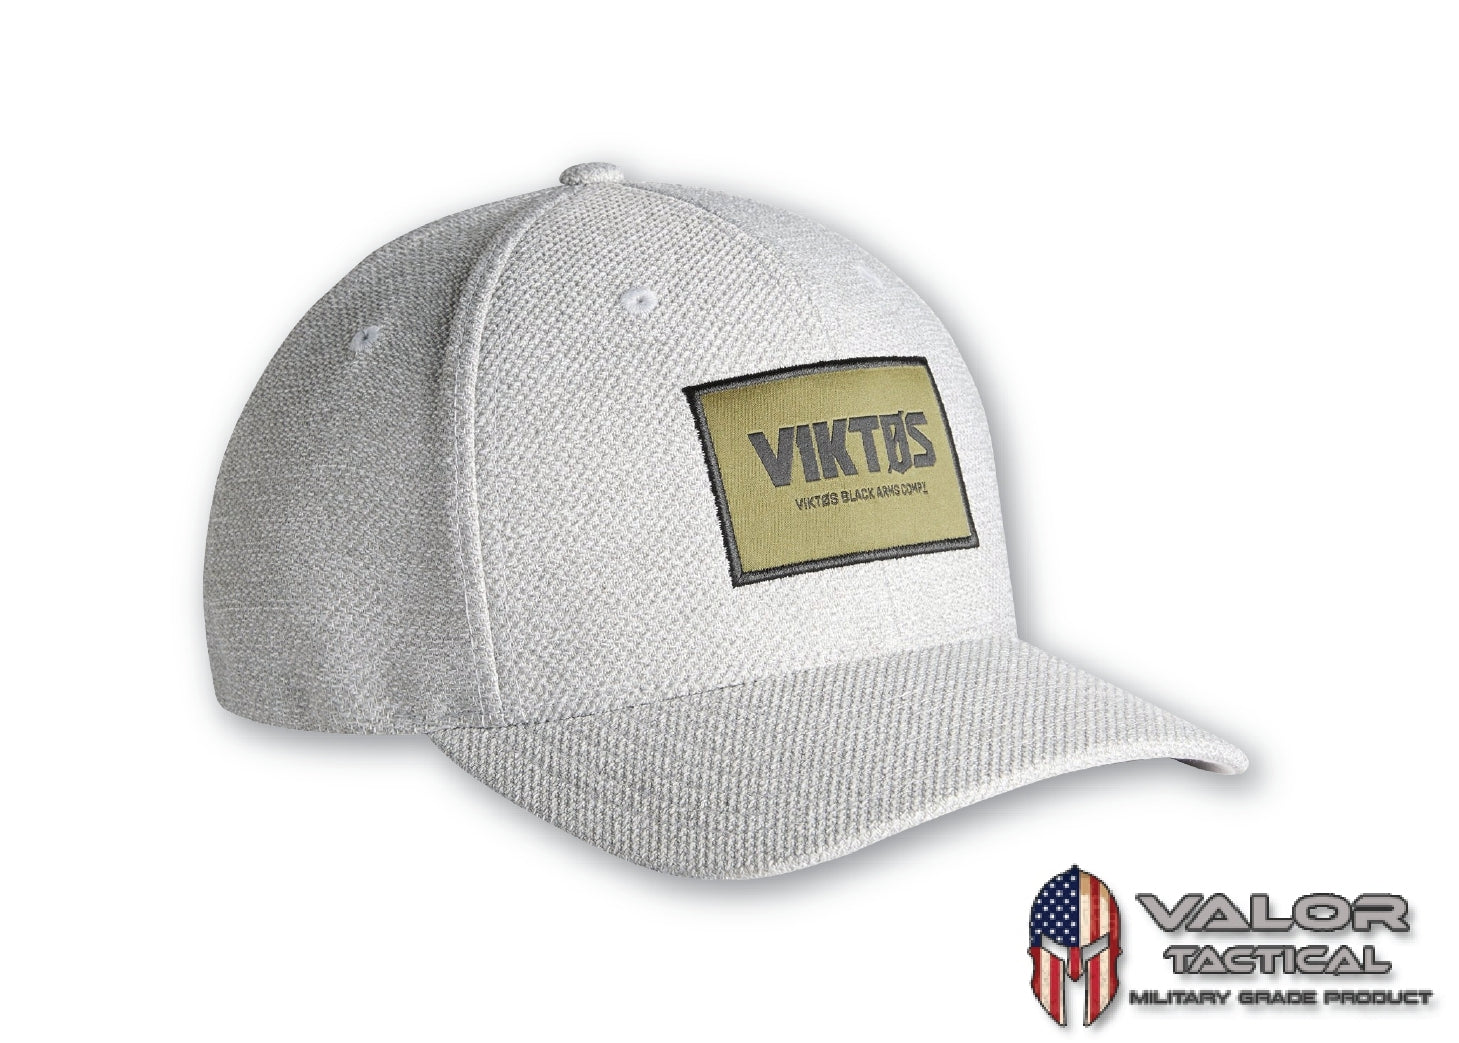 VIKTOS Flag Hat [Greyman]